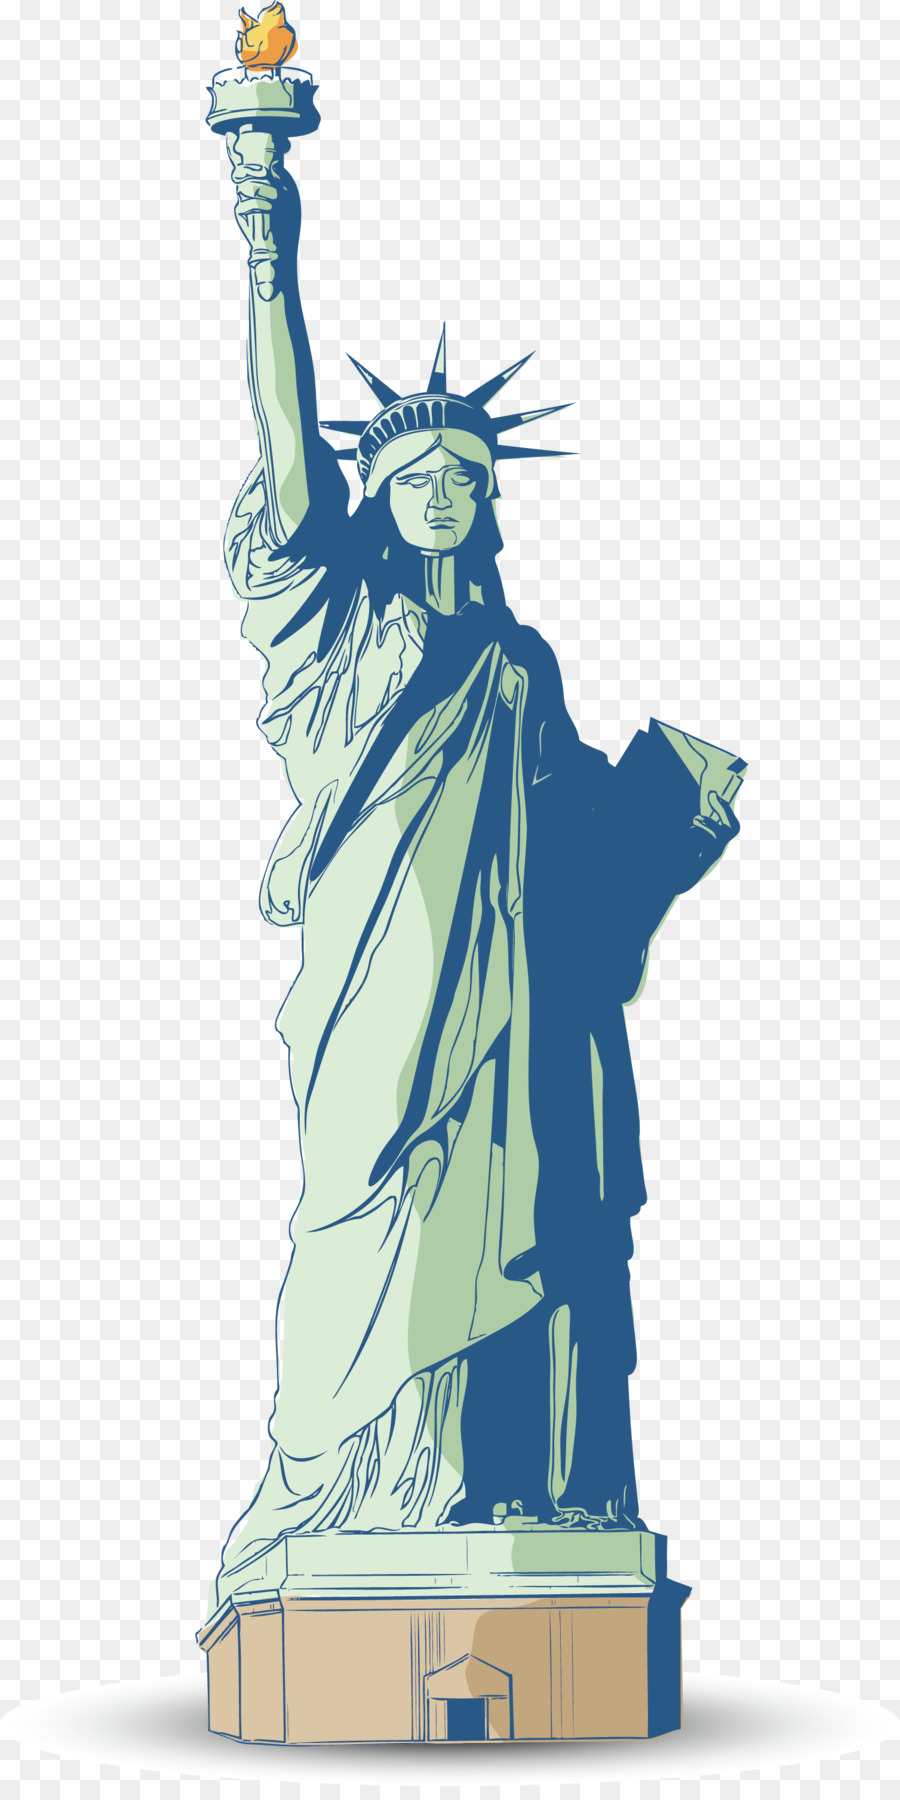 Statue of Liberty Clip art - Vector Statue of Liberty png download - 1507*2990 - Free Transparent Statue Of Liberty png Download.